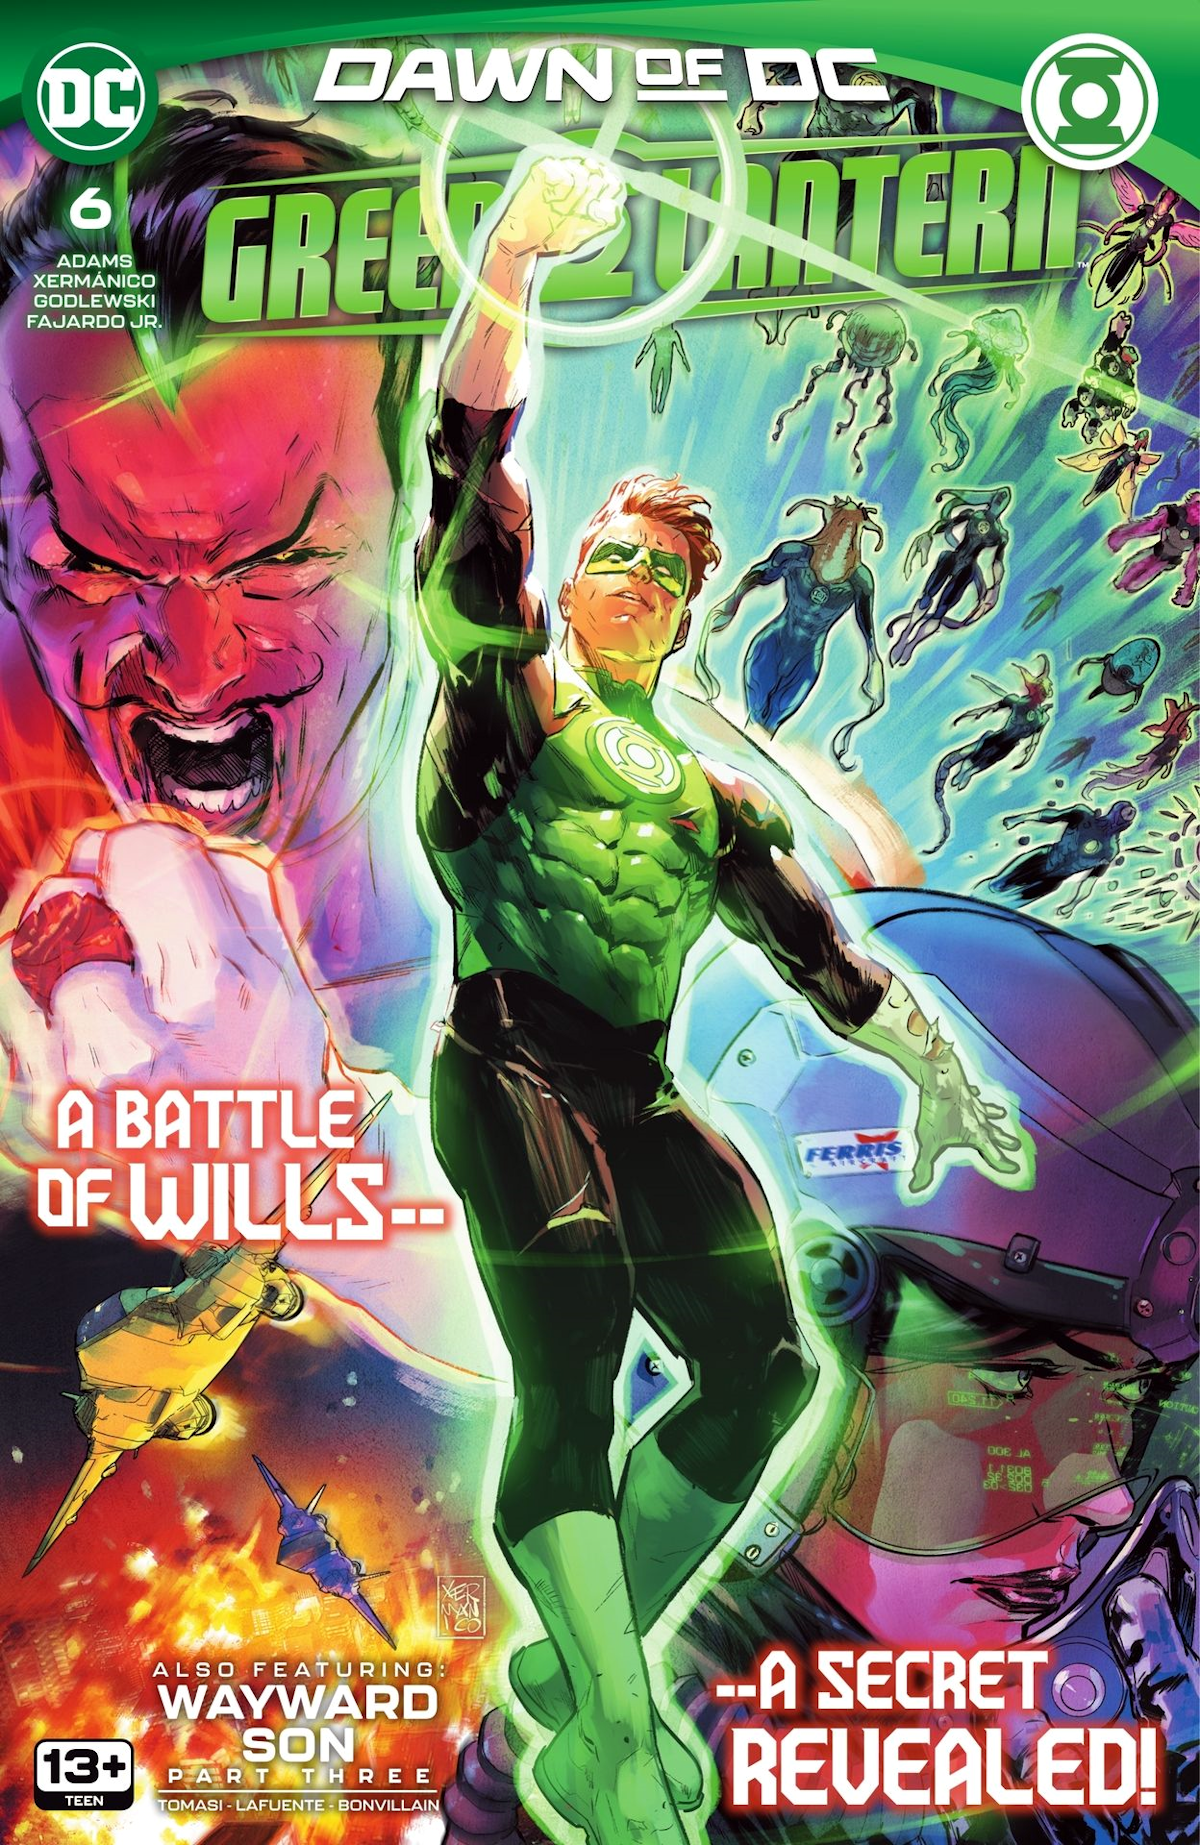 Green Lantern Vol. 7 6 (Cover A)